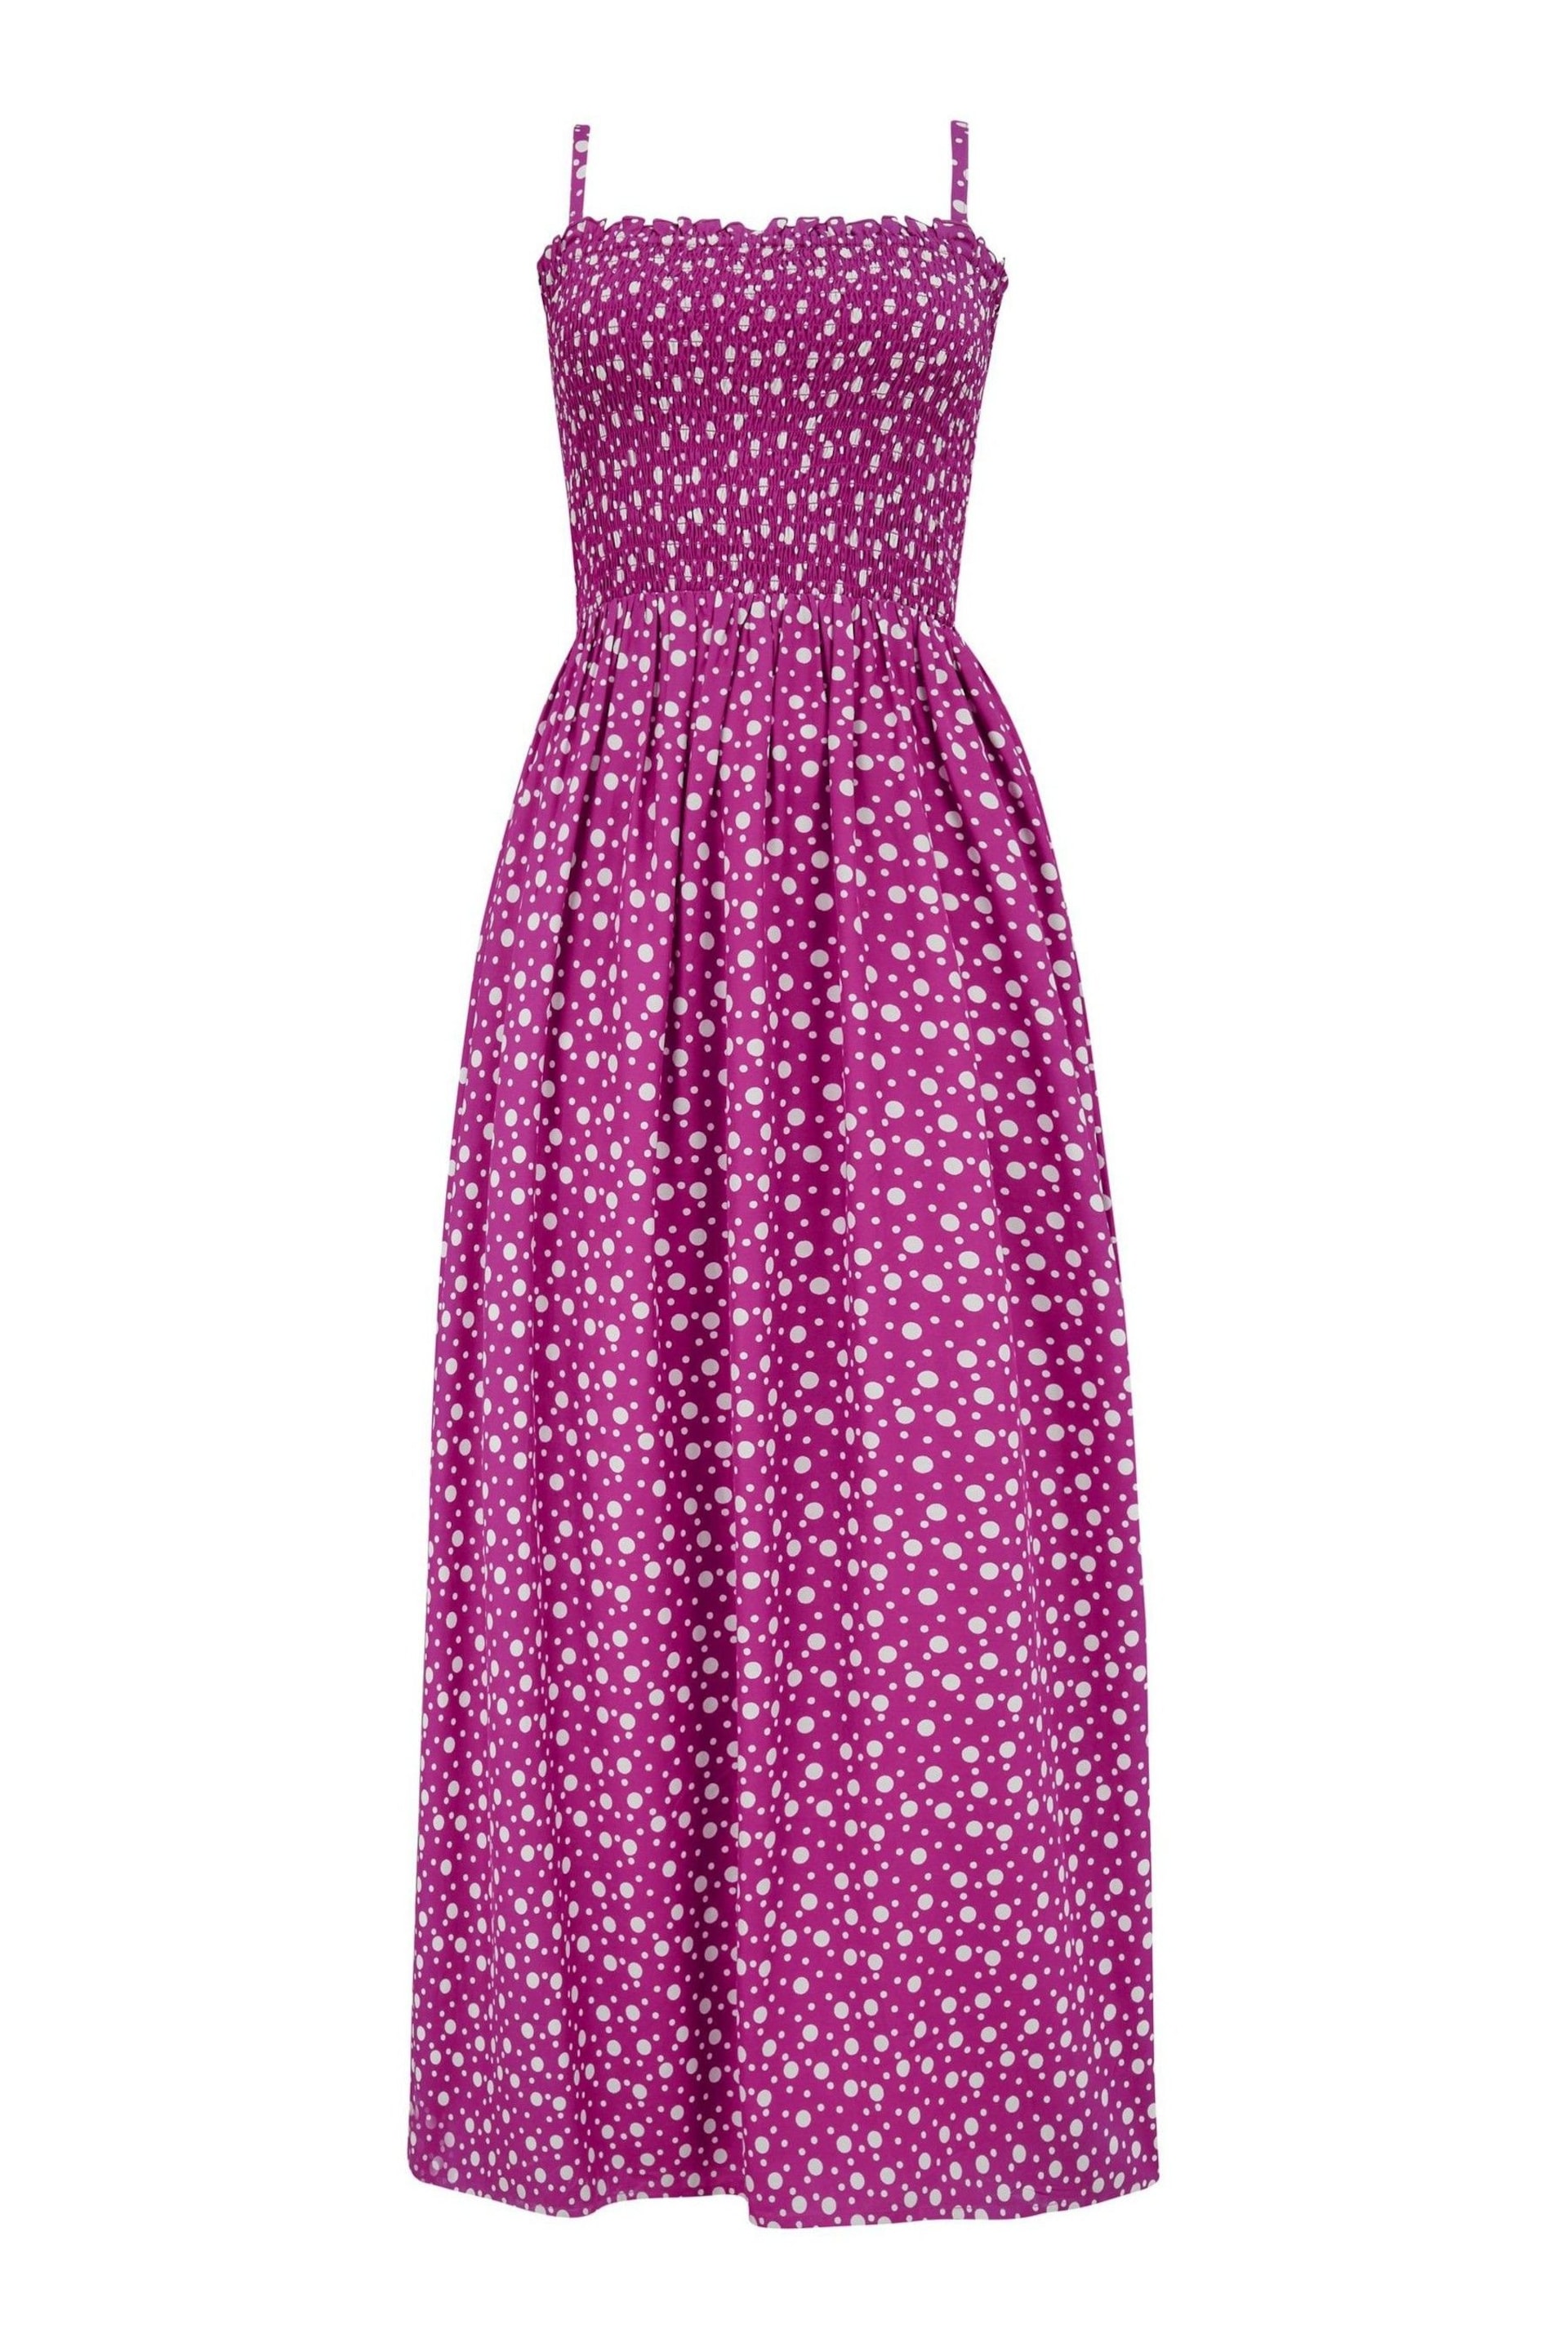 Pour Moi Purple Spot Strapless Shirred Bodice Maxi Beach Dress - Image 3 of 4